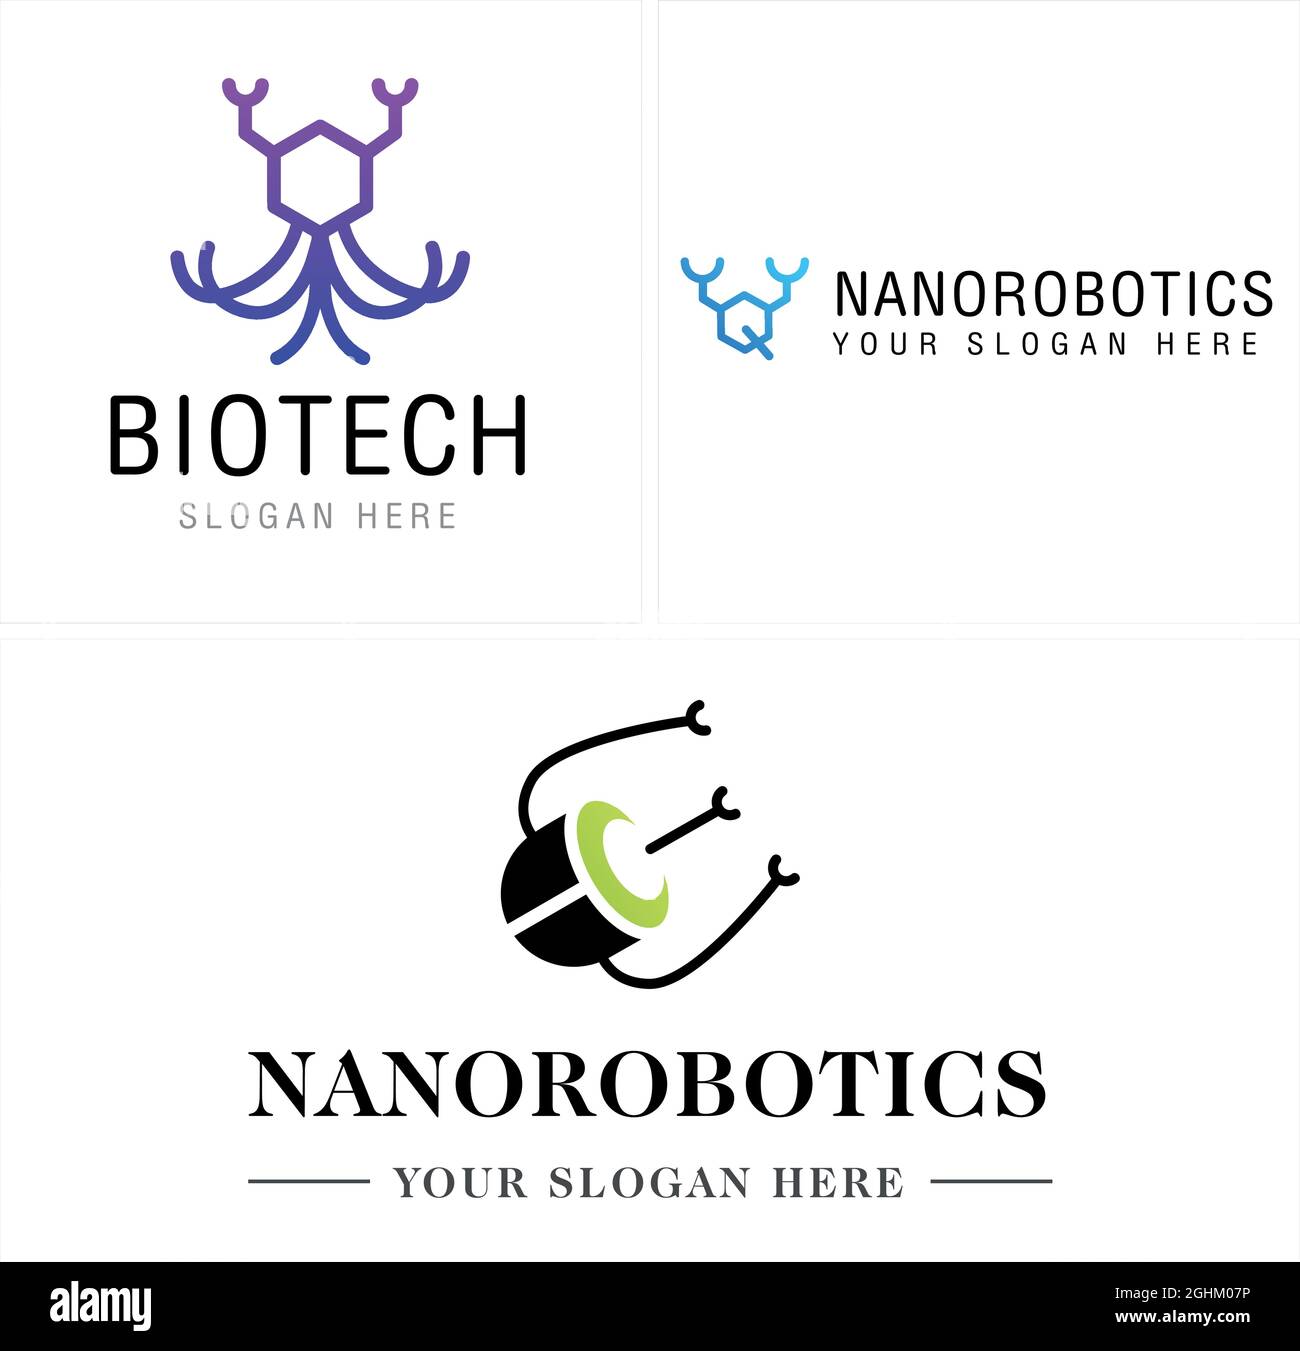 Nanorobotics biotech science logo design Stock Vector